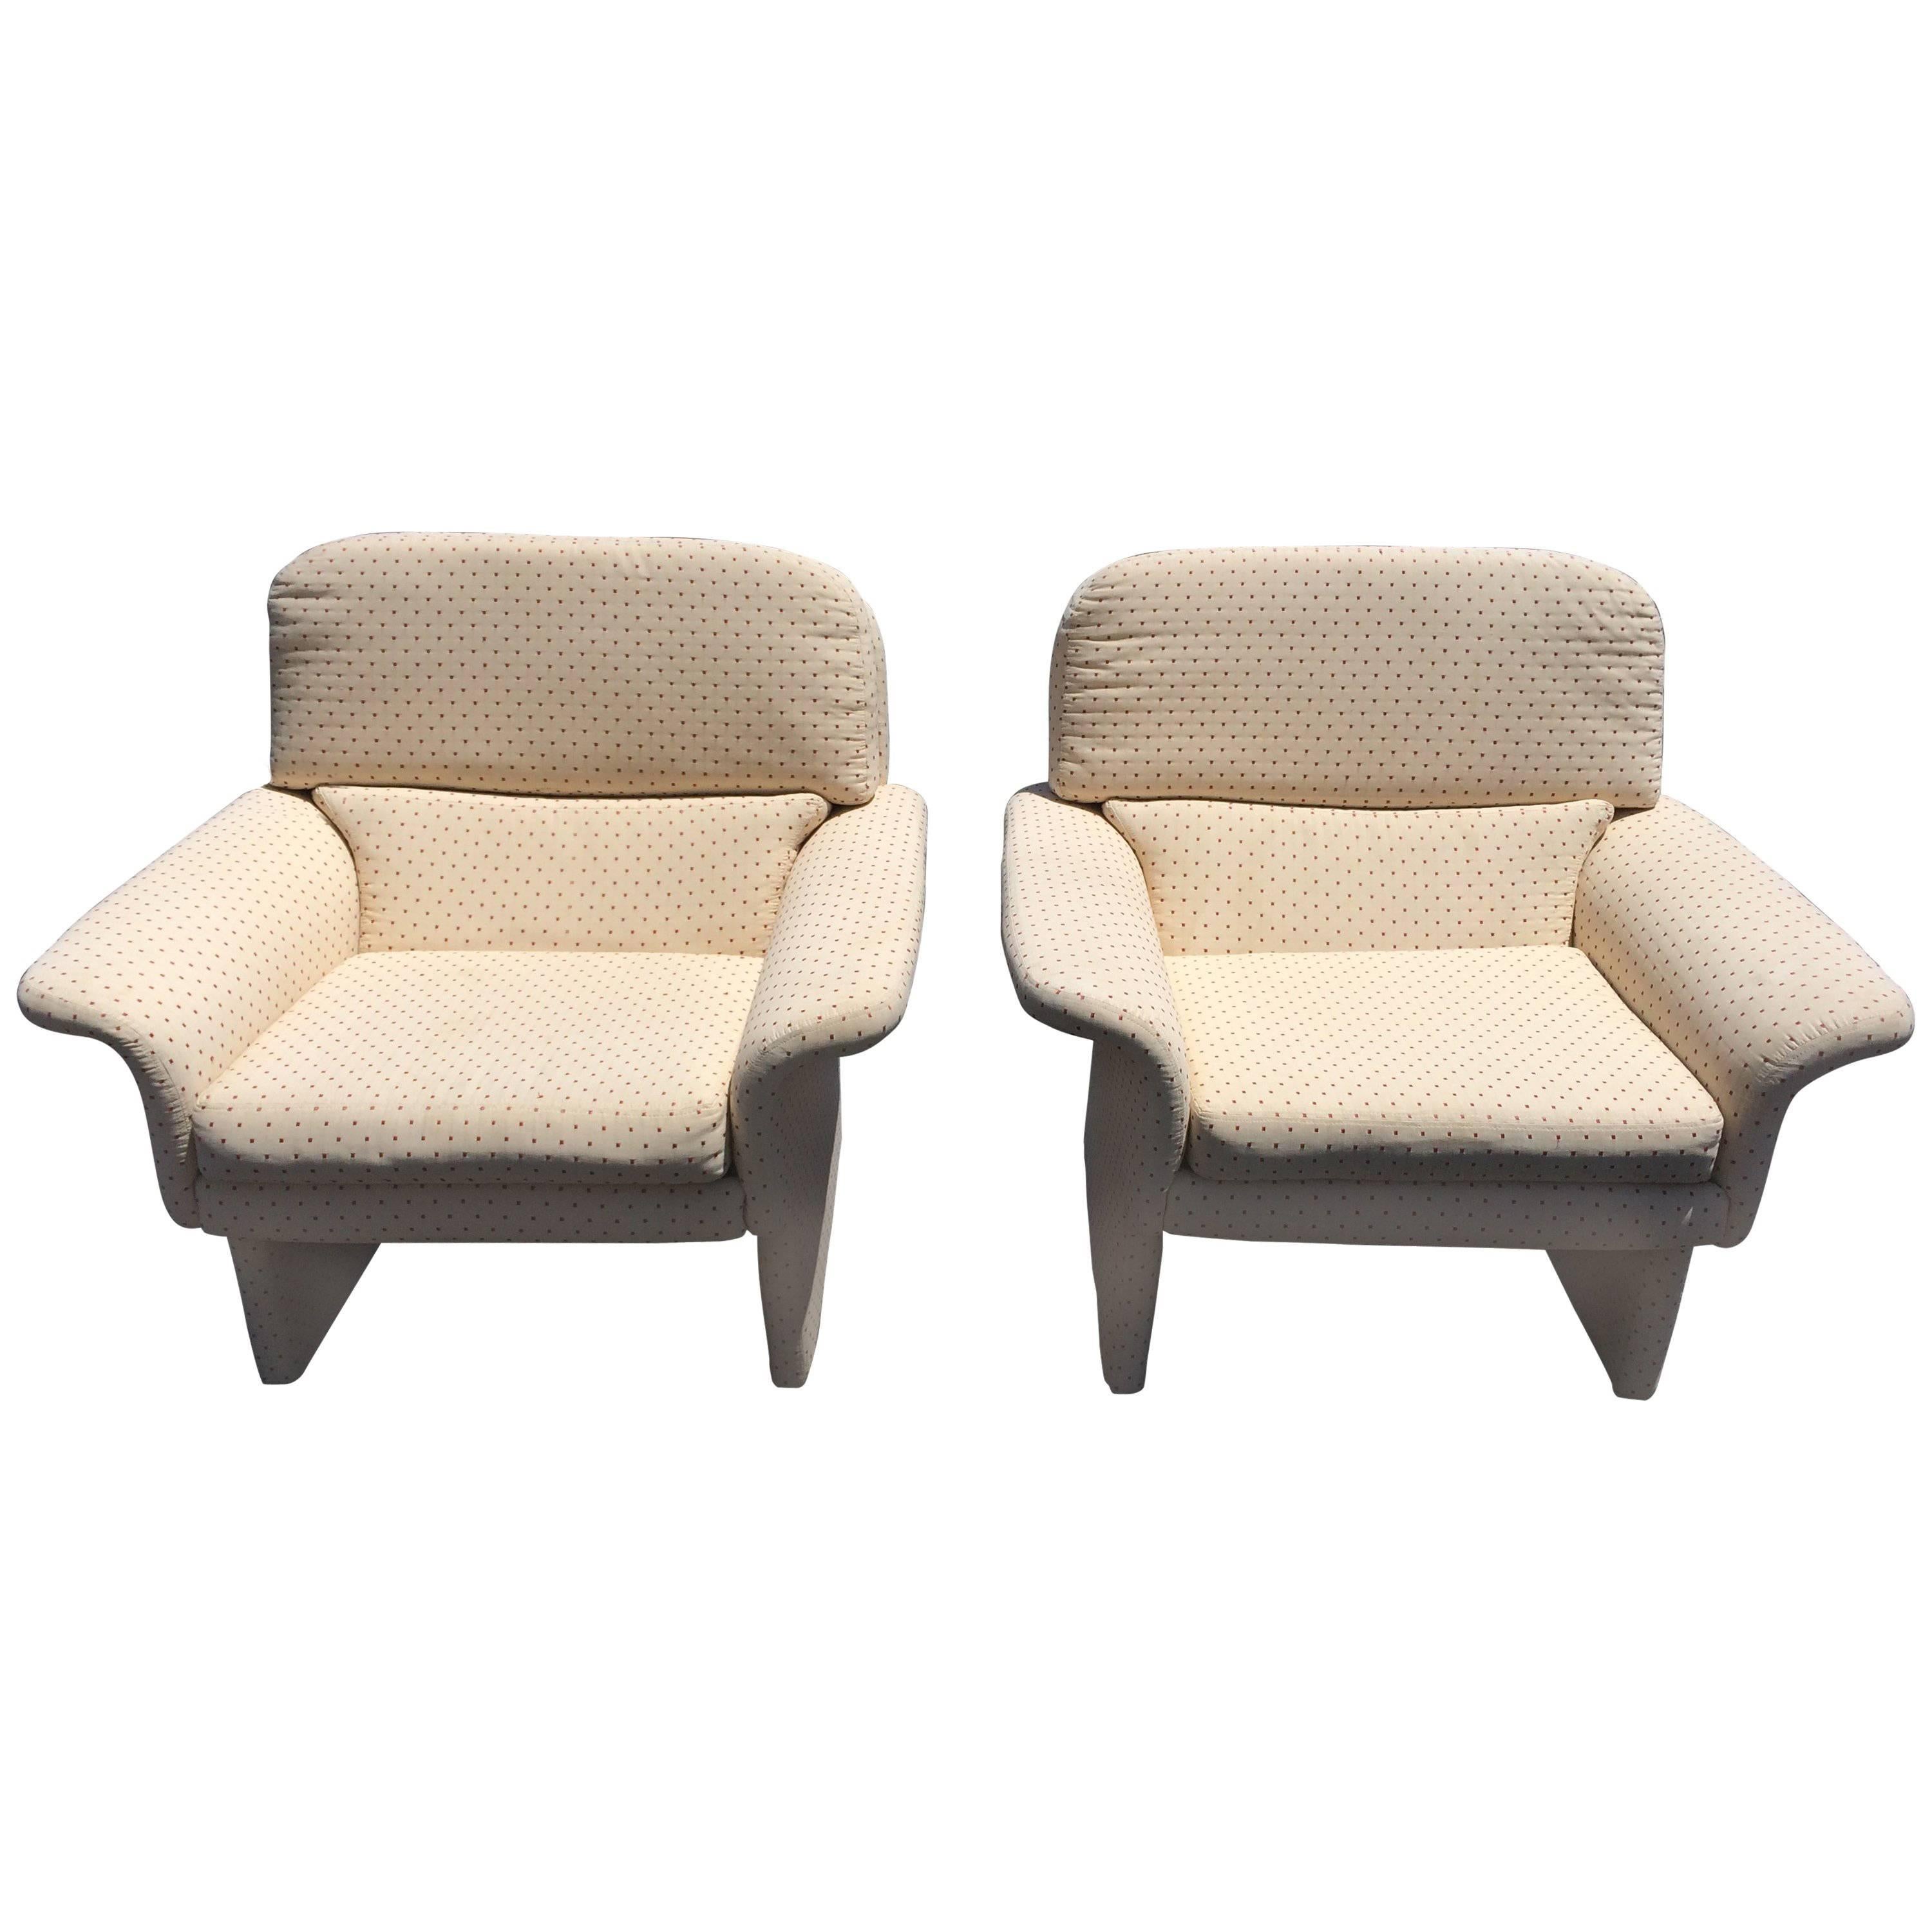 Pair of 1980's Saporiti Style Modular Lounge Chairs.